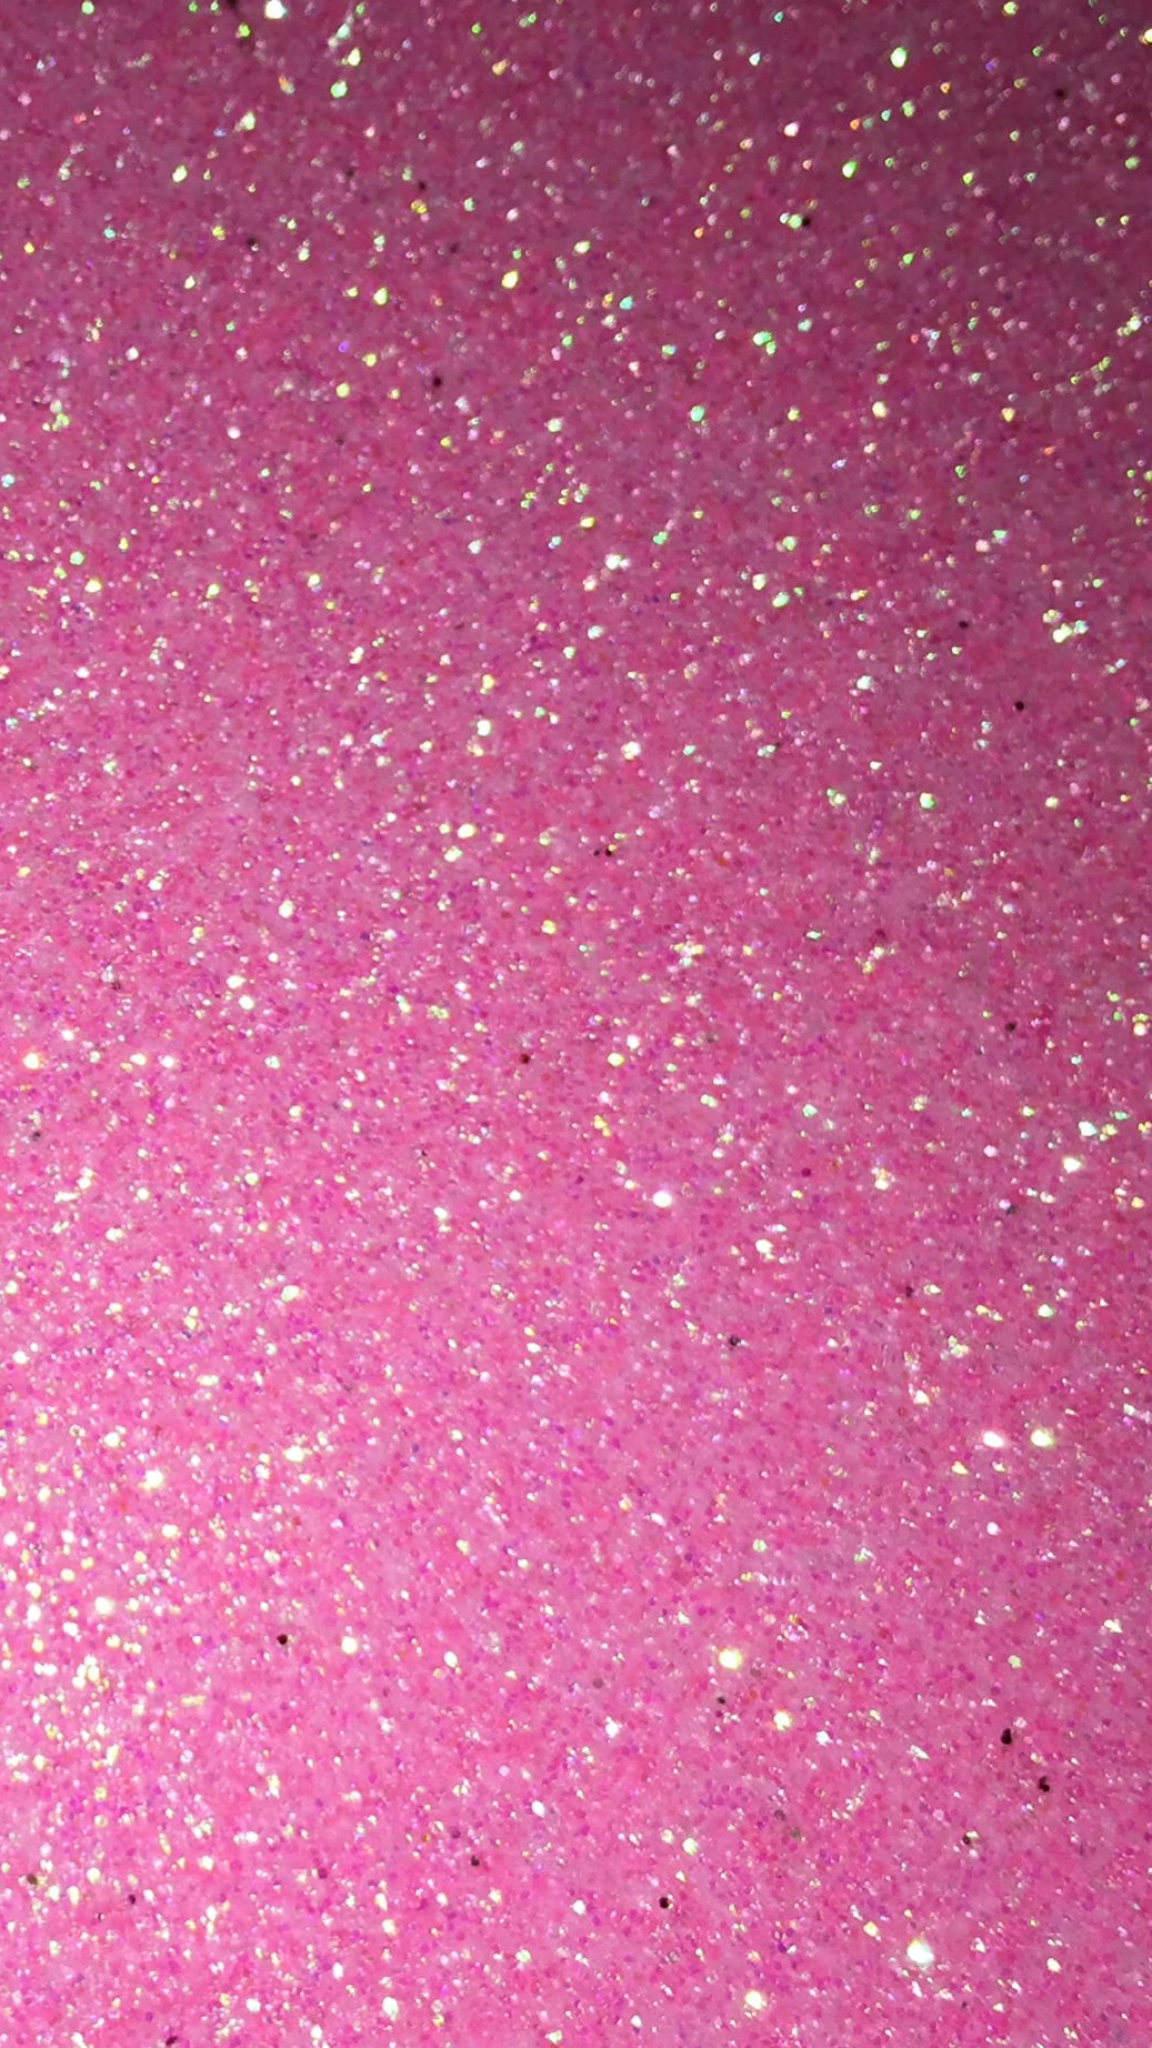 1152x2048 Pink glitter phone wallpaper sparkle background sparkling bling shimmer sparkles glitter | Sparkles background, Glitter phone wallpaper, Phone wallpaper